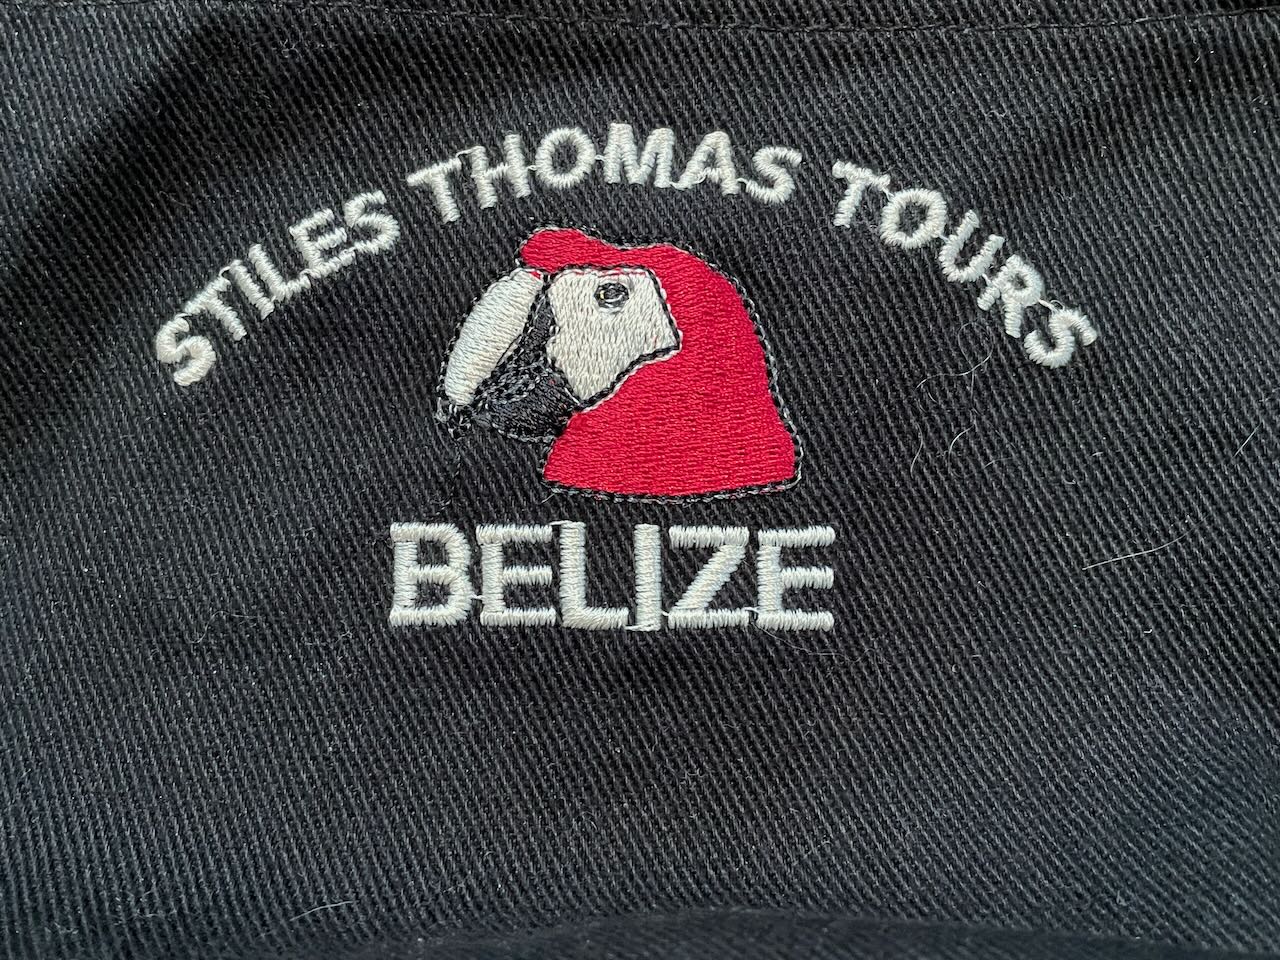 Stiles' Belize Patch